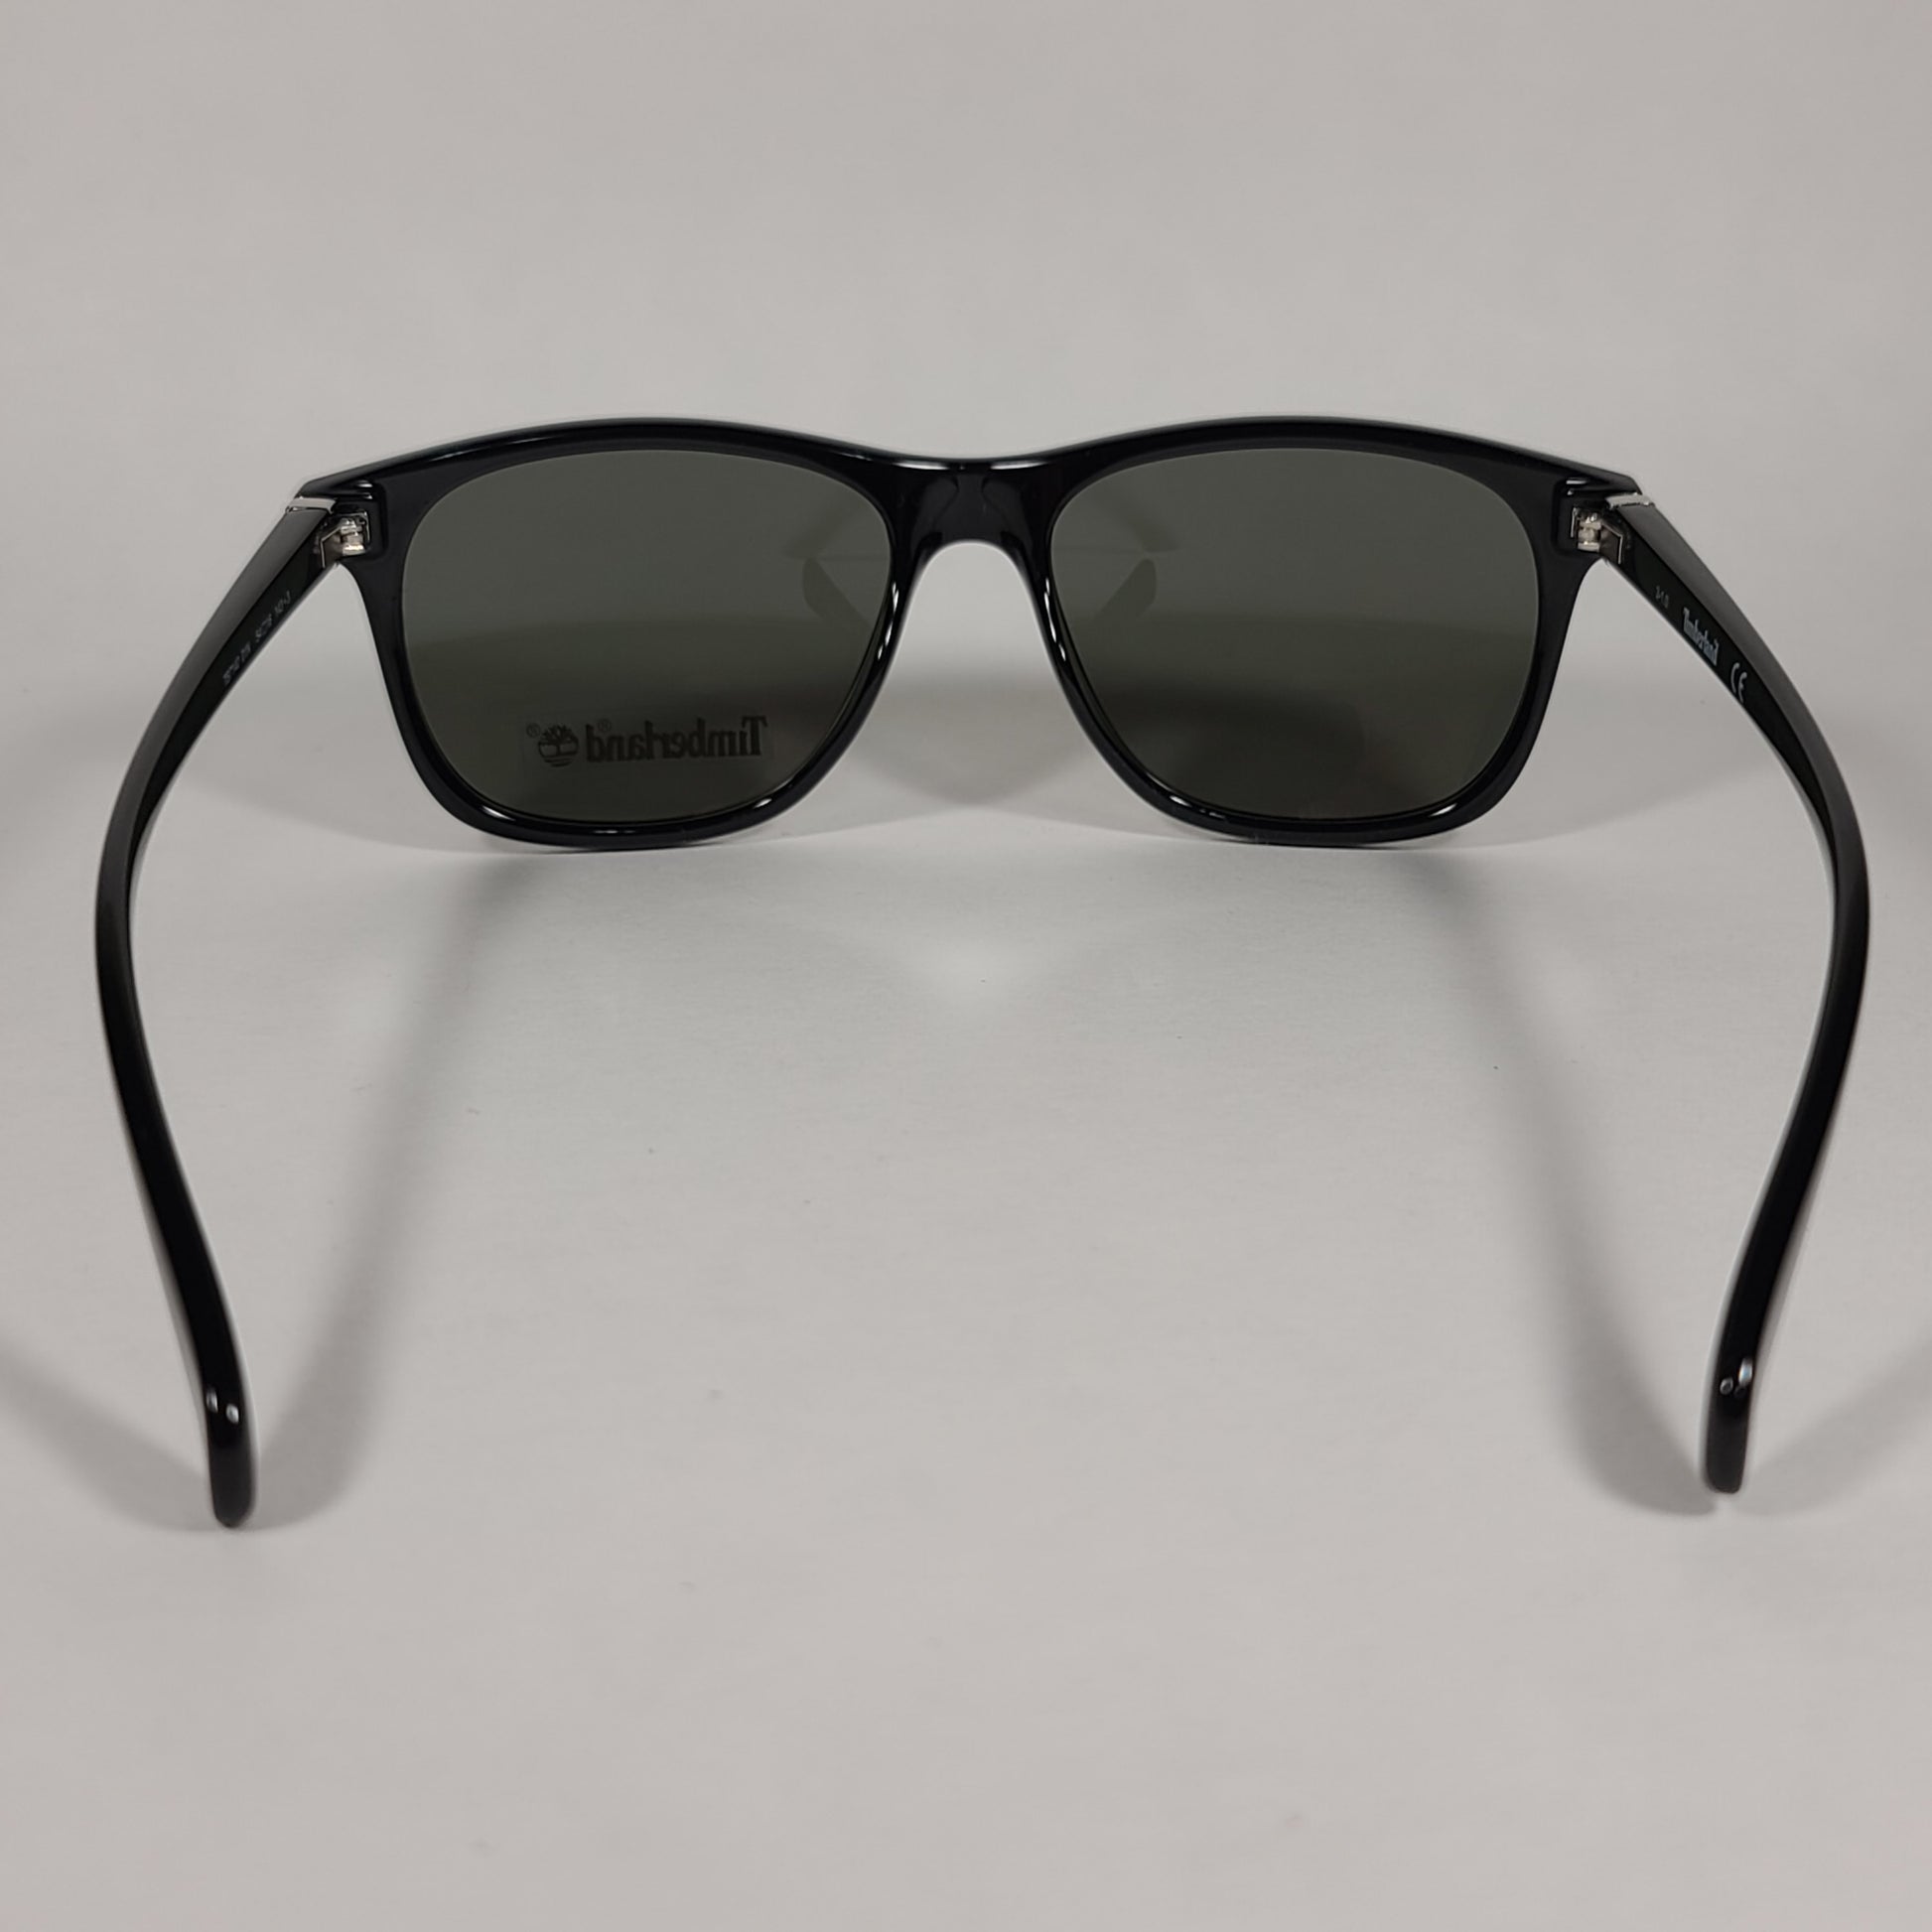 Timberland Square Sunglasses Shiny Black Frame Green Lens TB7140 01N - Sunglasses